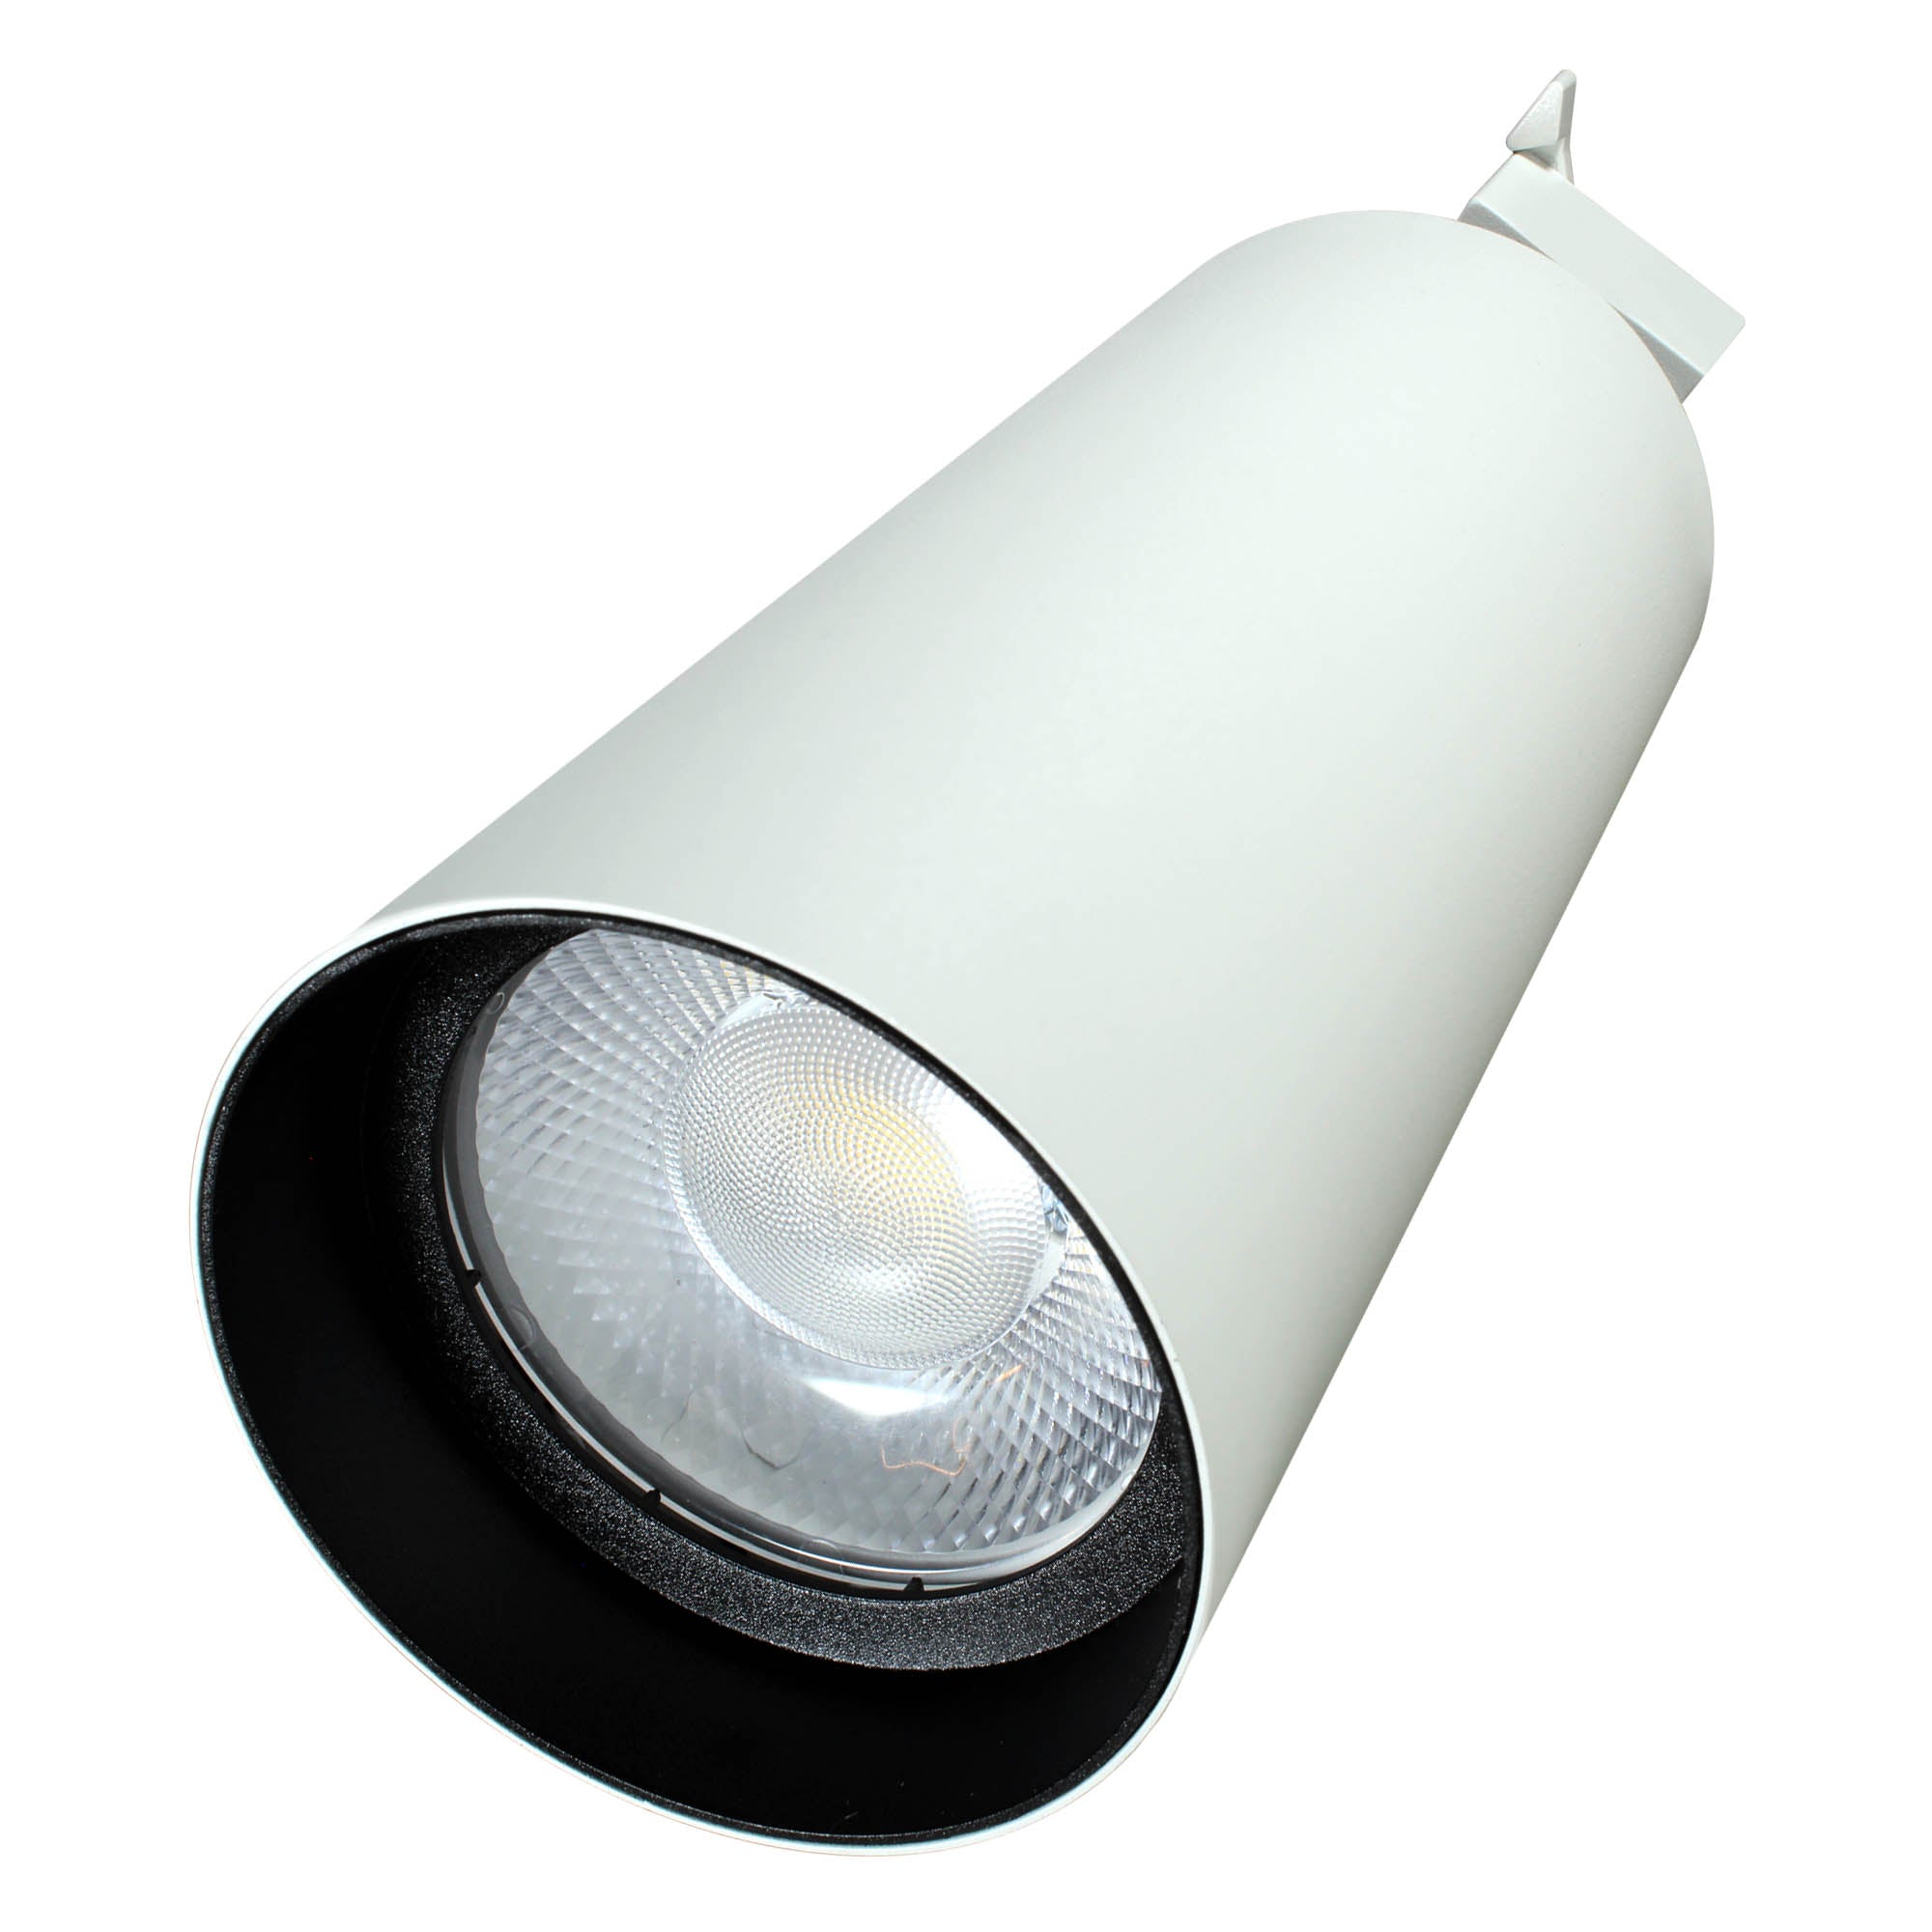 Luminaria LED tipo Spot para Riel, Modelo TL-2929.R - Precisión y Estilo para Iluminar con Distinción